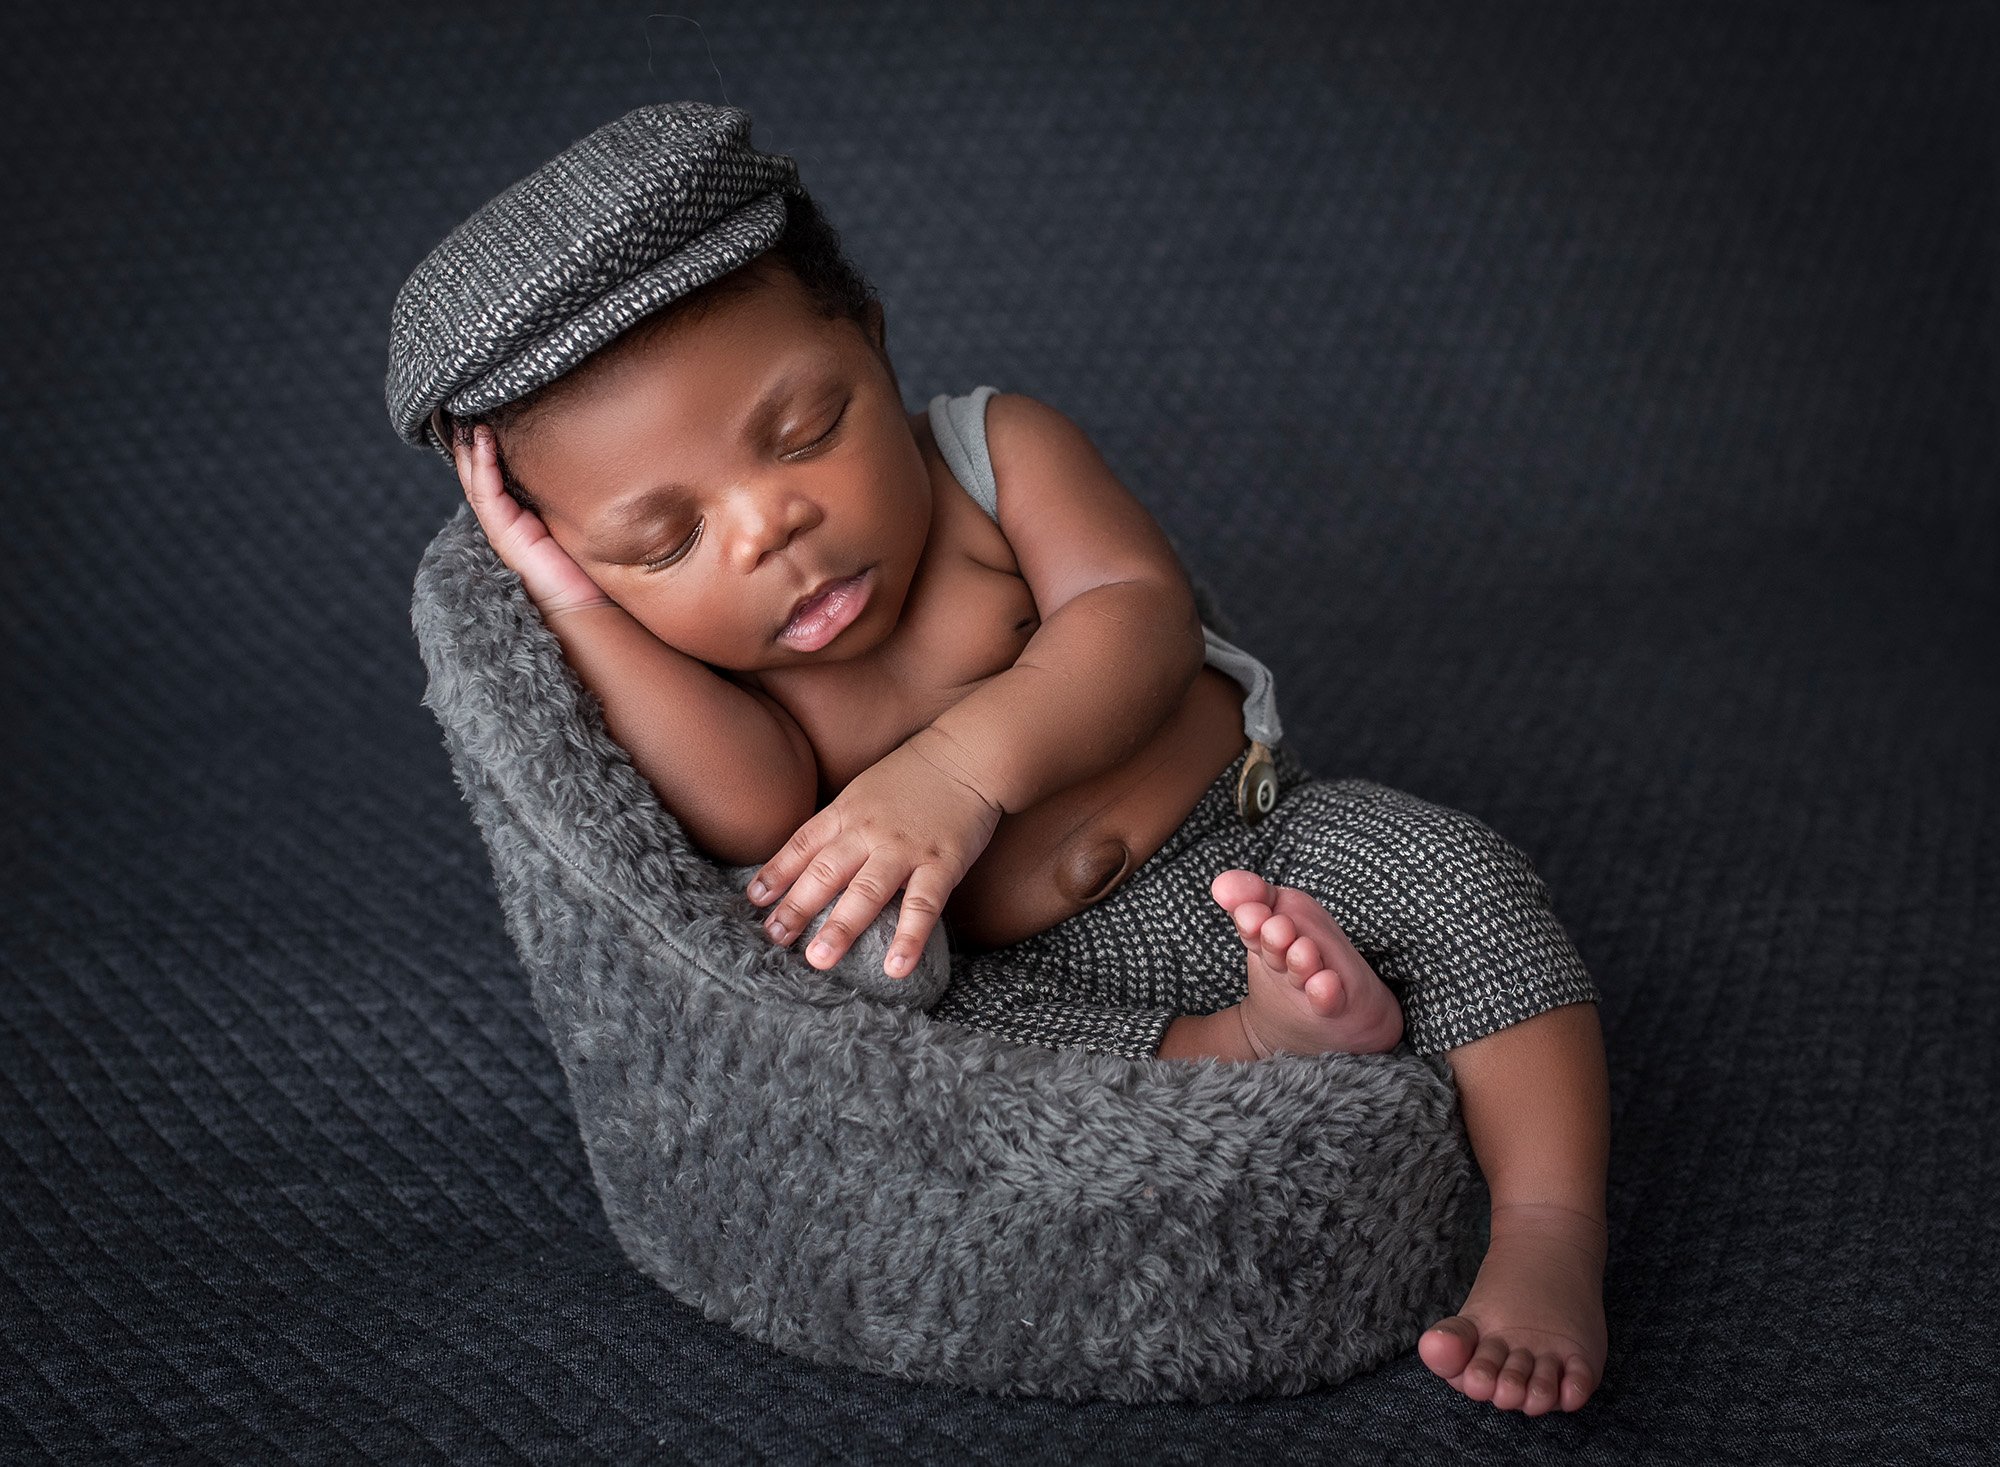 Jamaican boy newborn photographs newborn baby boy asleep in gray lounge chair wearing Gatsby cap